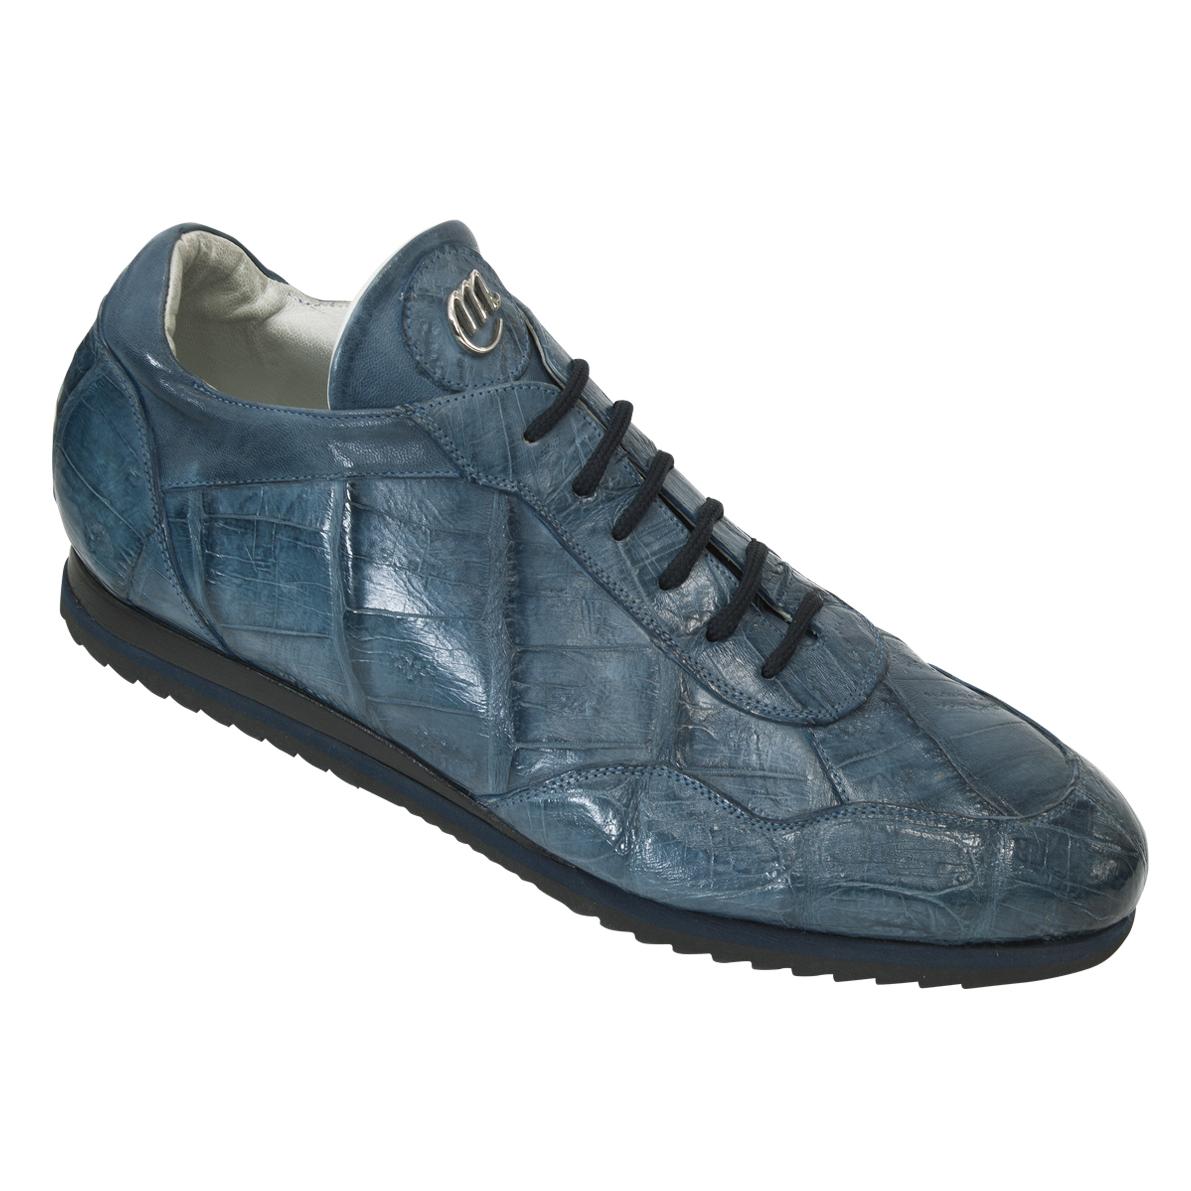 caribbean blue sneakers